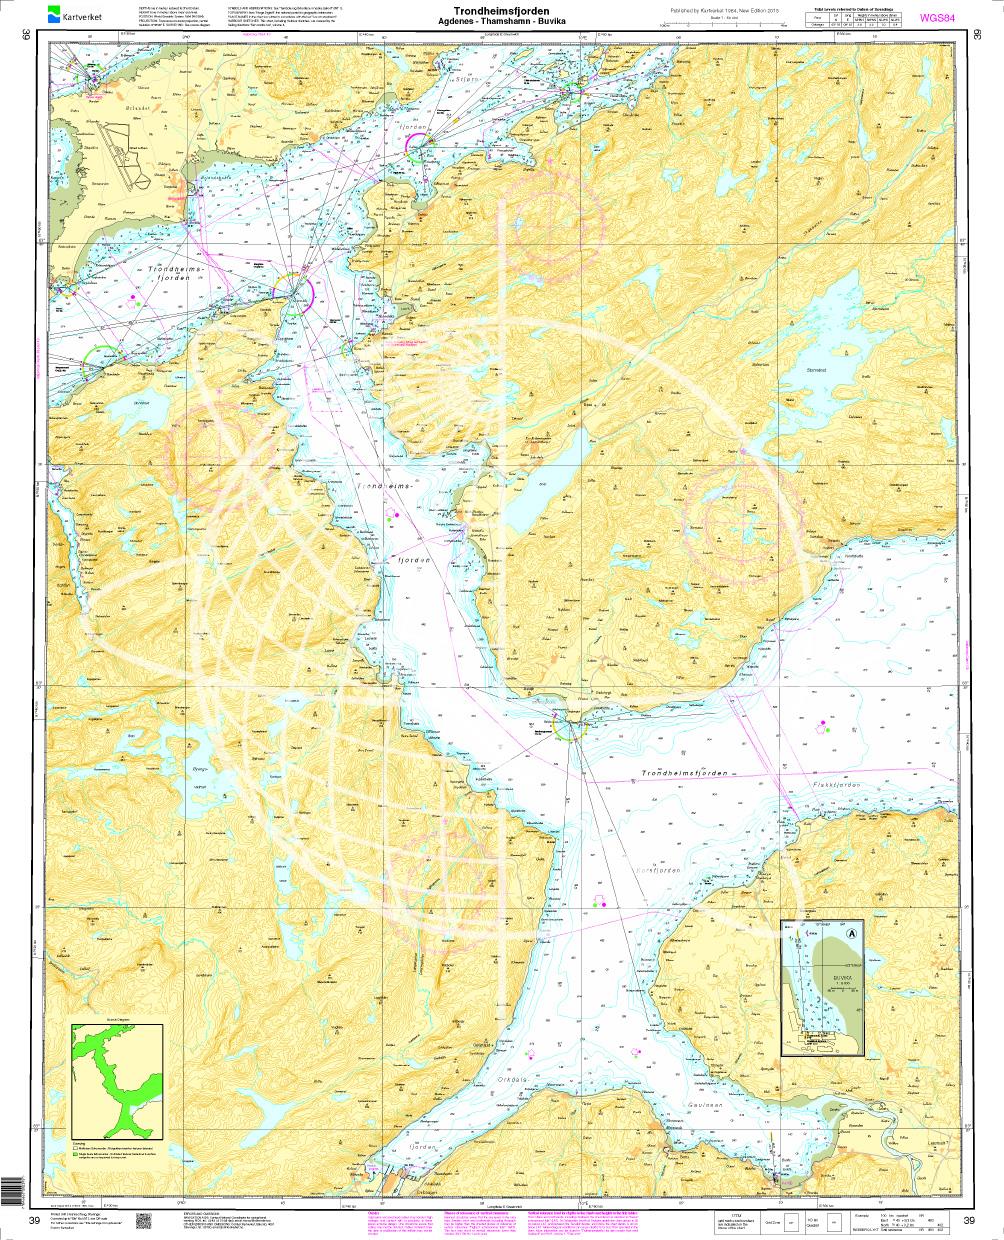 Norwegen 39 Atlantik, Trondheimsfjord mit  Agdenes - Thamshamn - Buvika